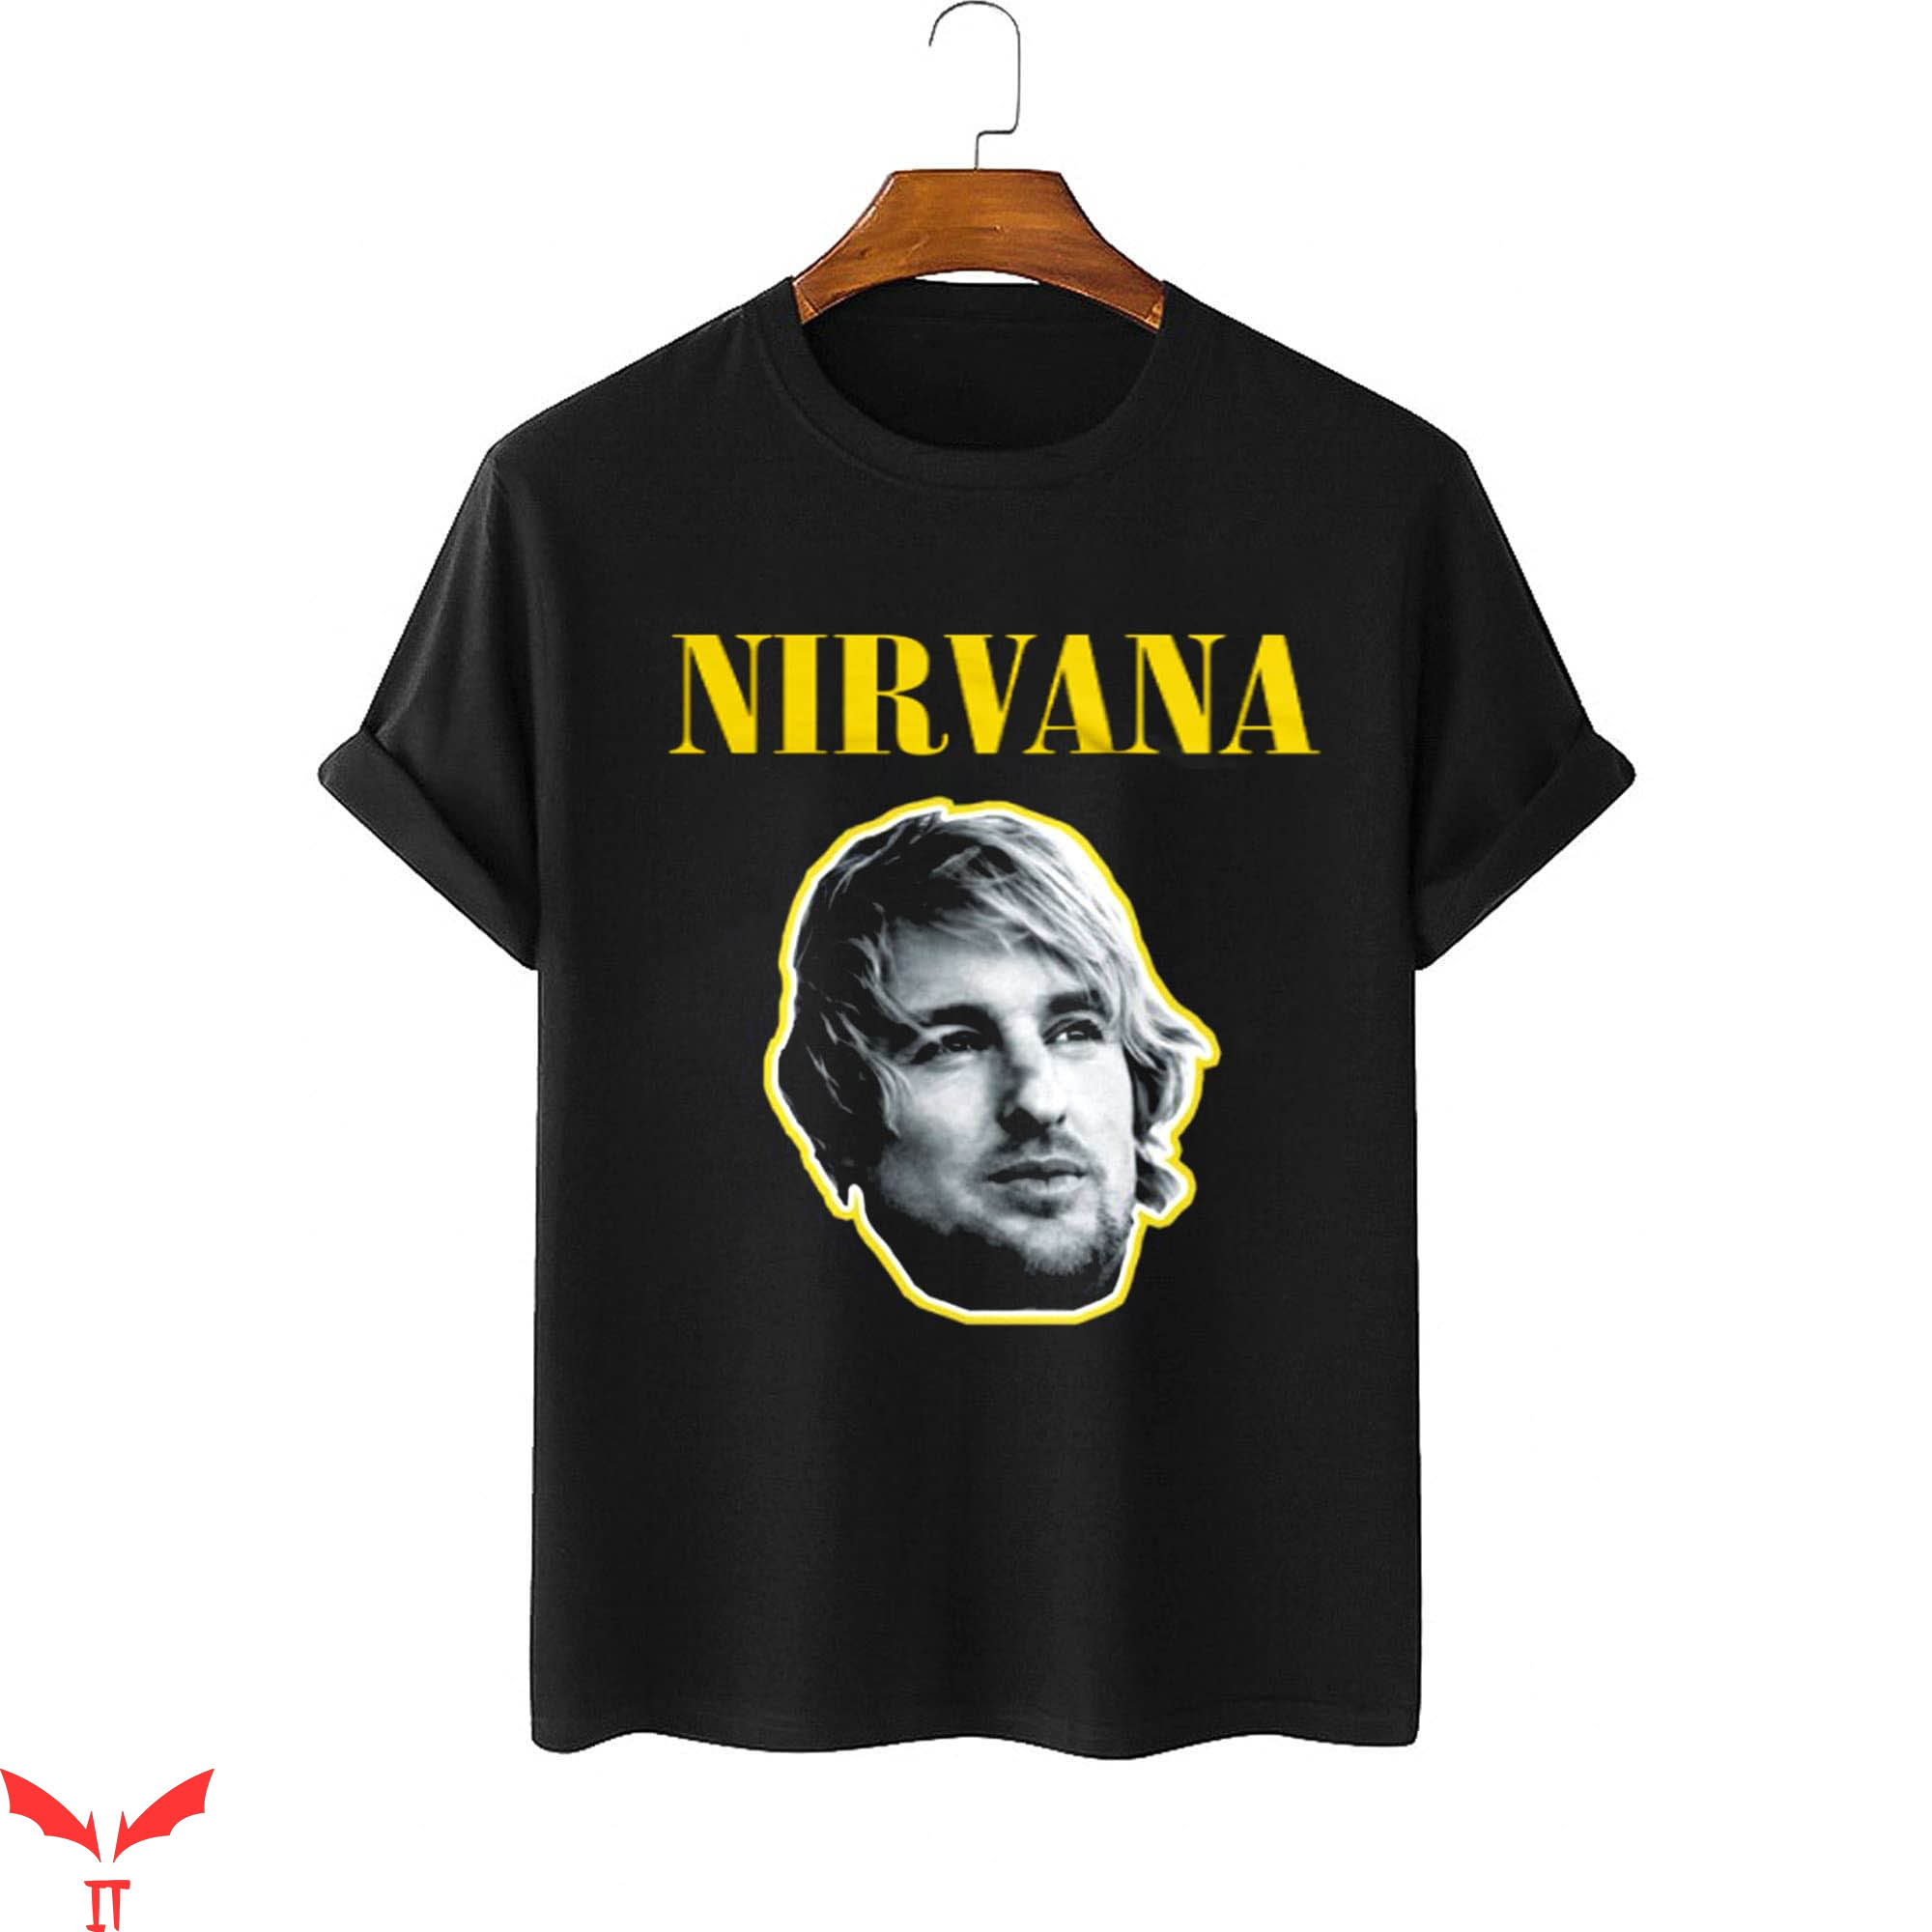 Nirvana Owen Wilson T-Shirt Funny Face Cool Style Tee Shirt